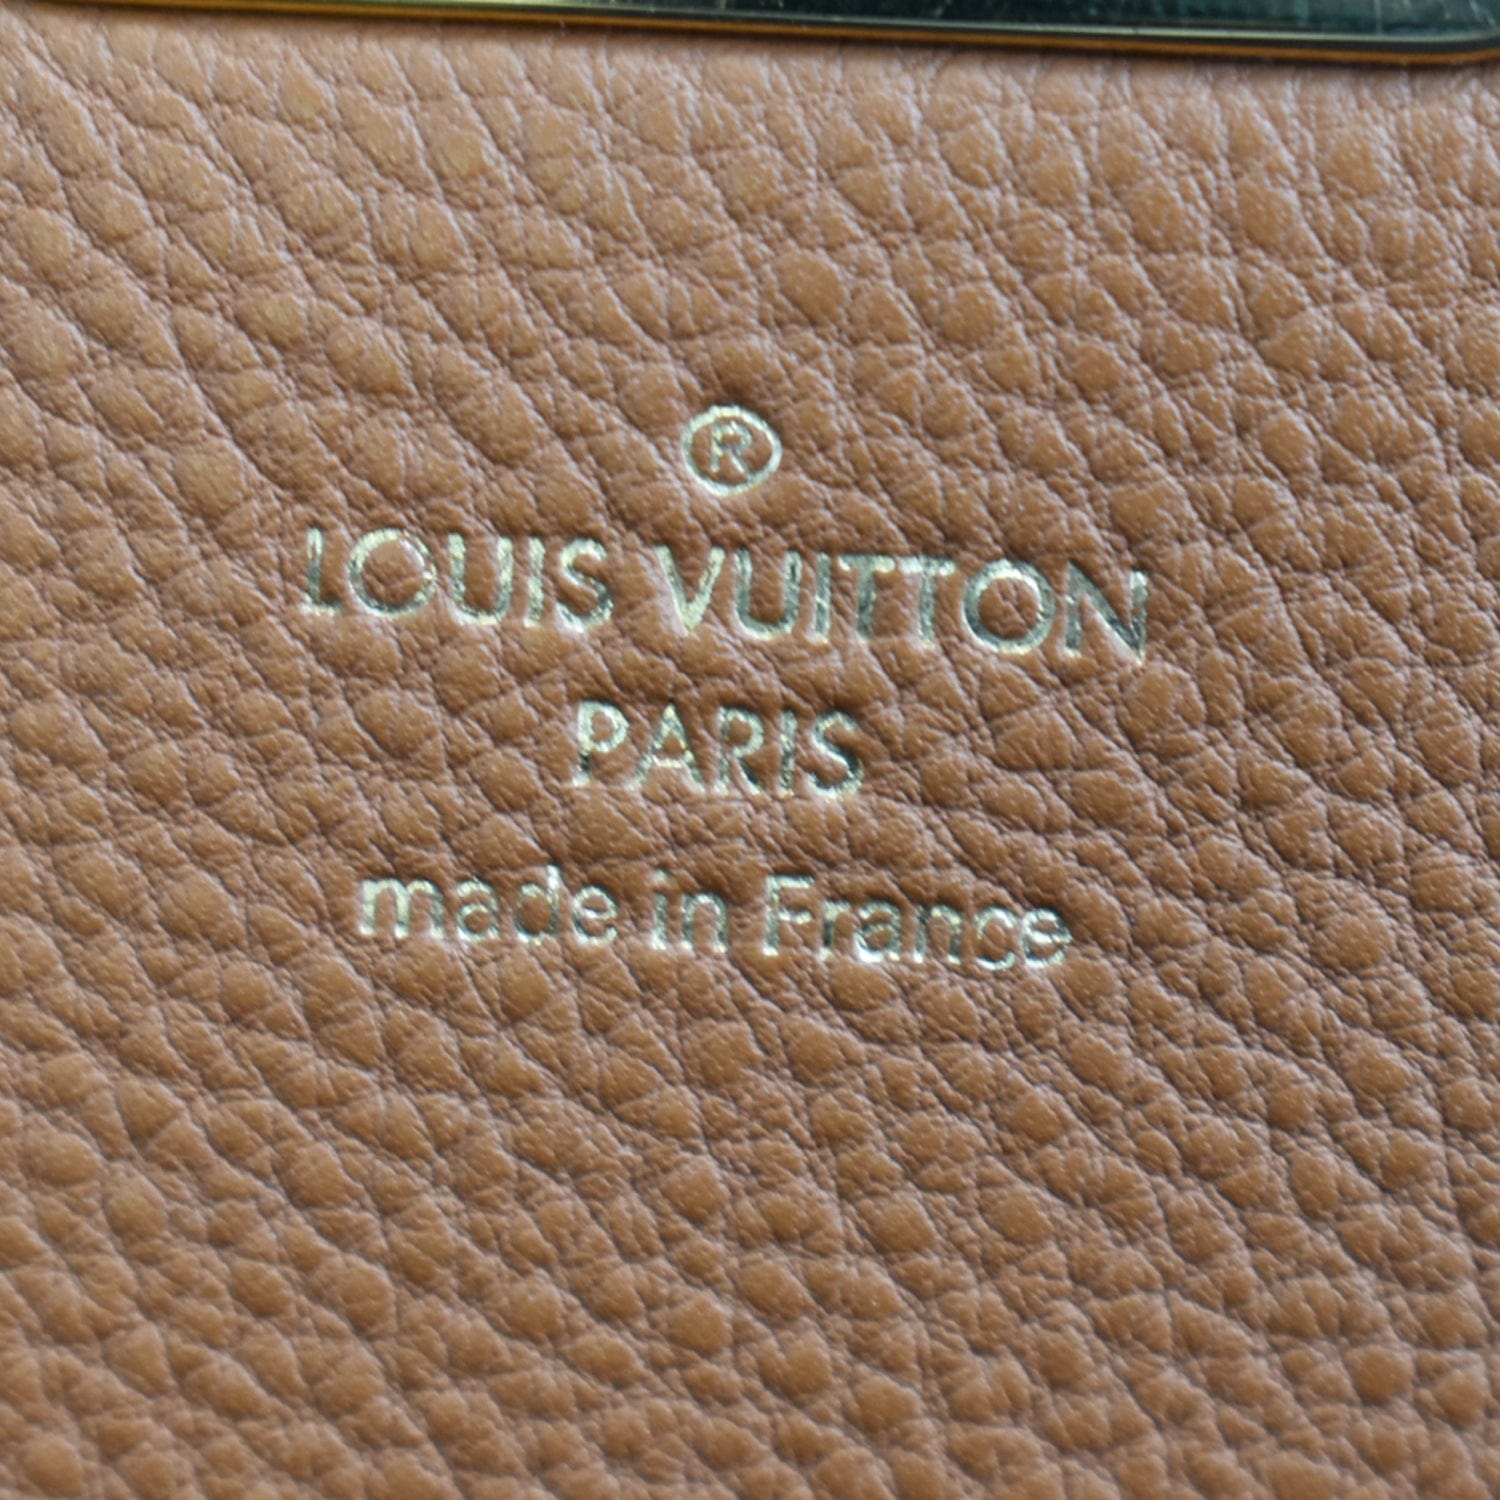 Louis Vuitton Eden Orient 2Way Tan Brown Red Monogram Canvas Shoulder Bag